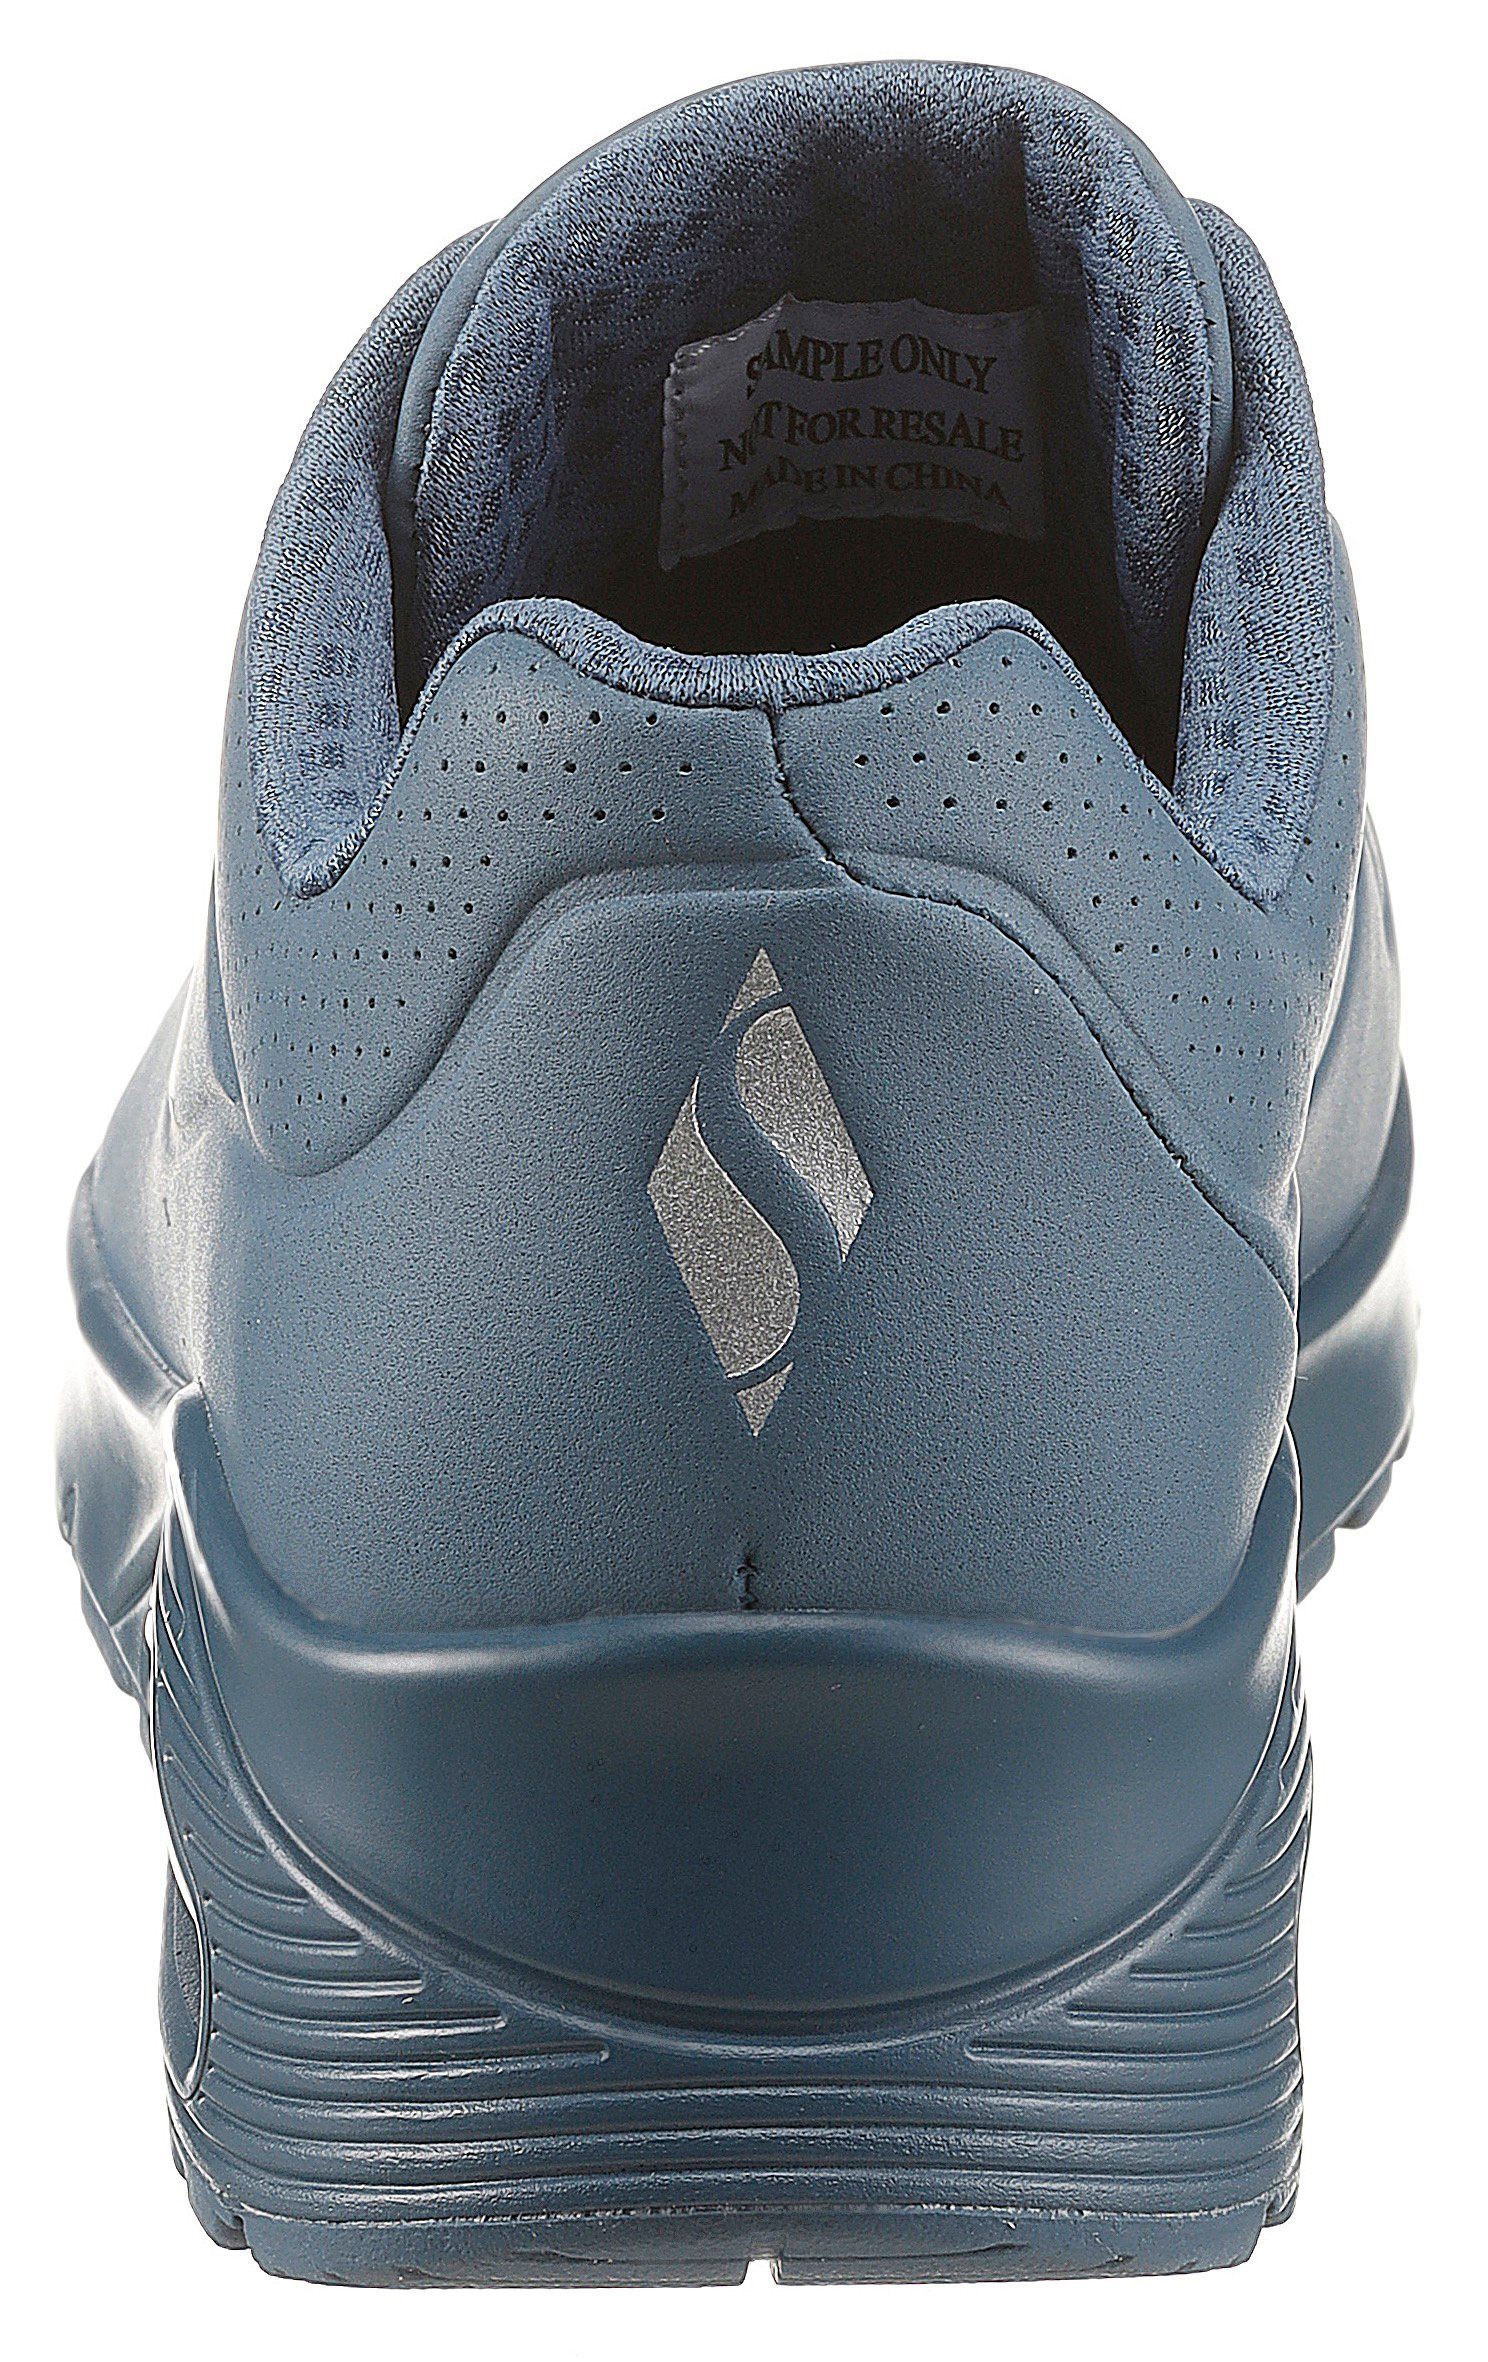 Skechers Uno Perforation Stand - blau feiner on mit Air Wedgesneaker